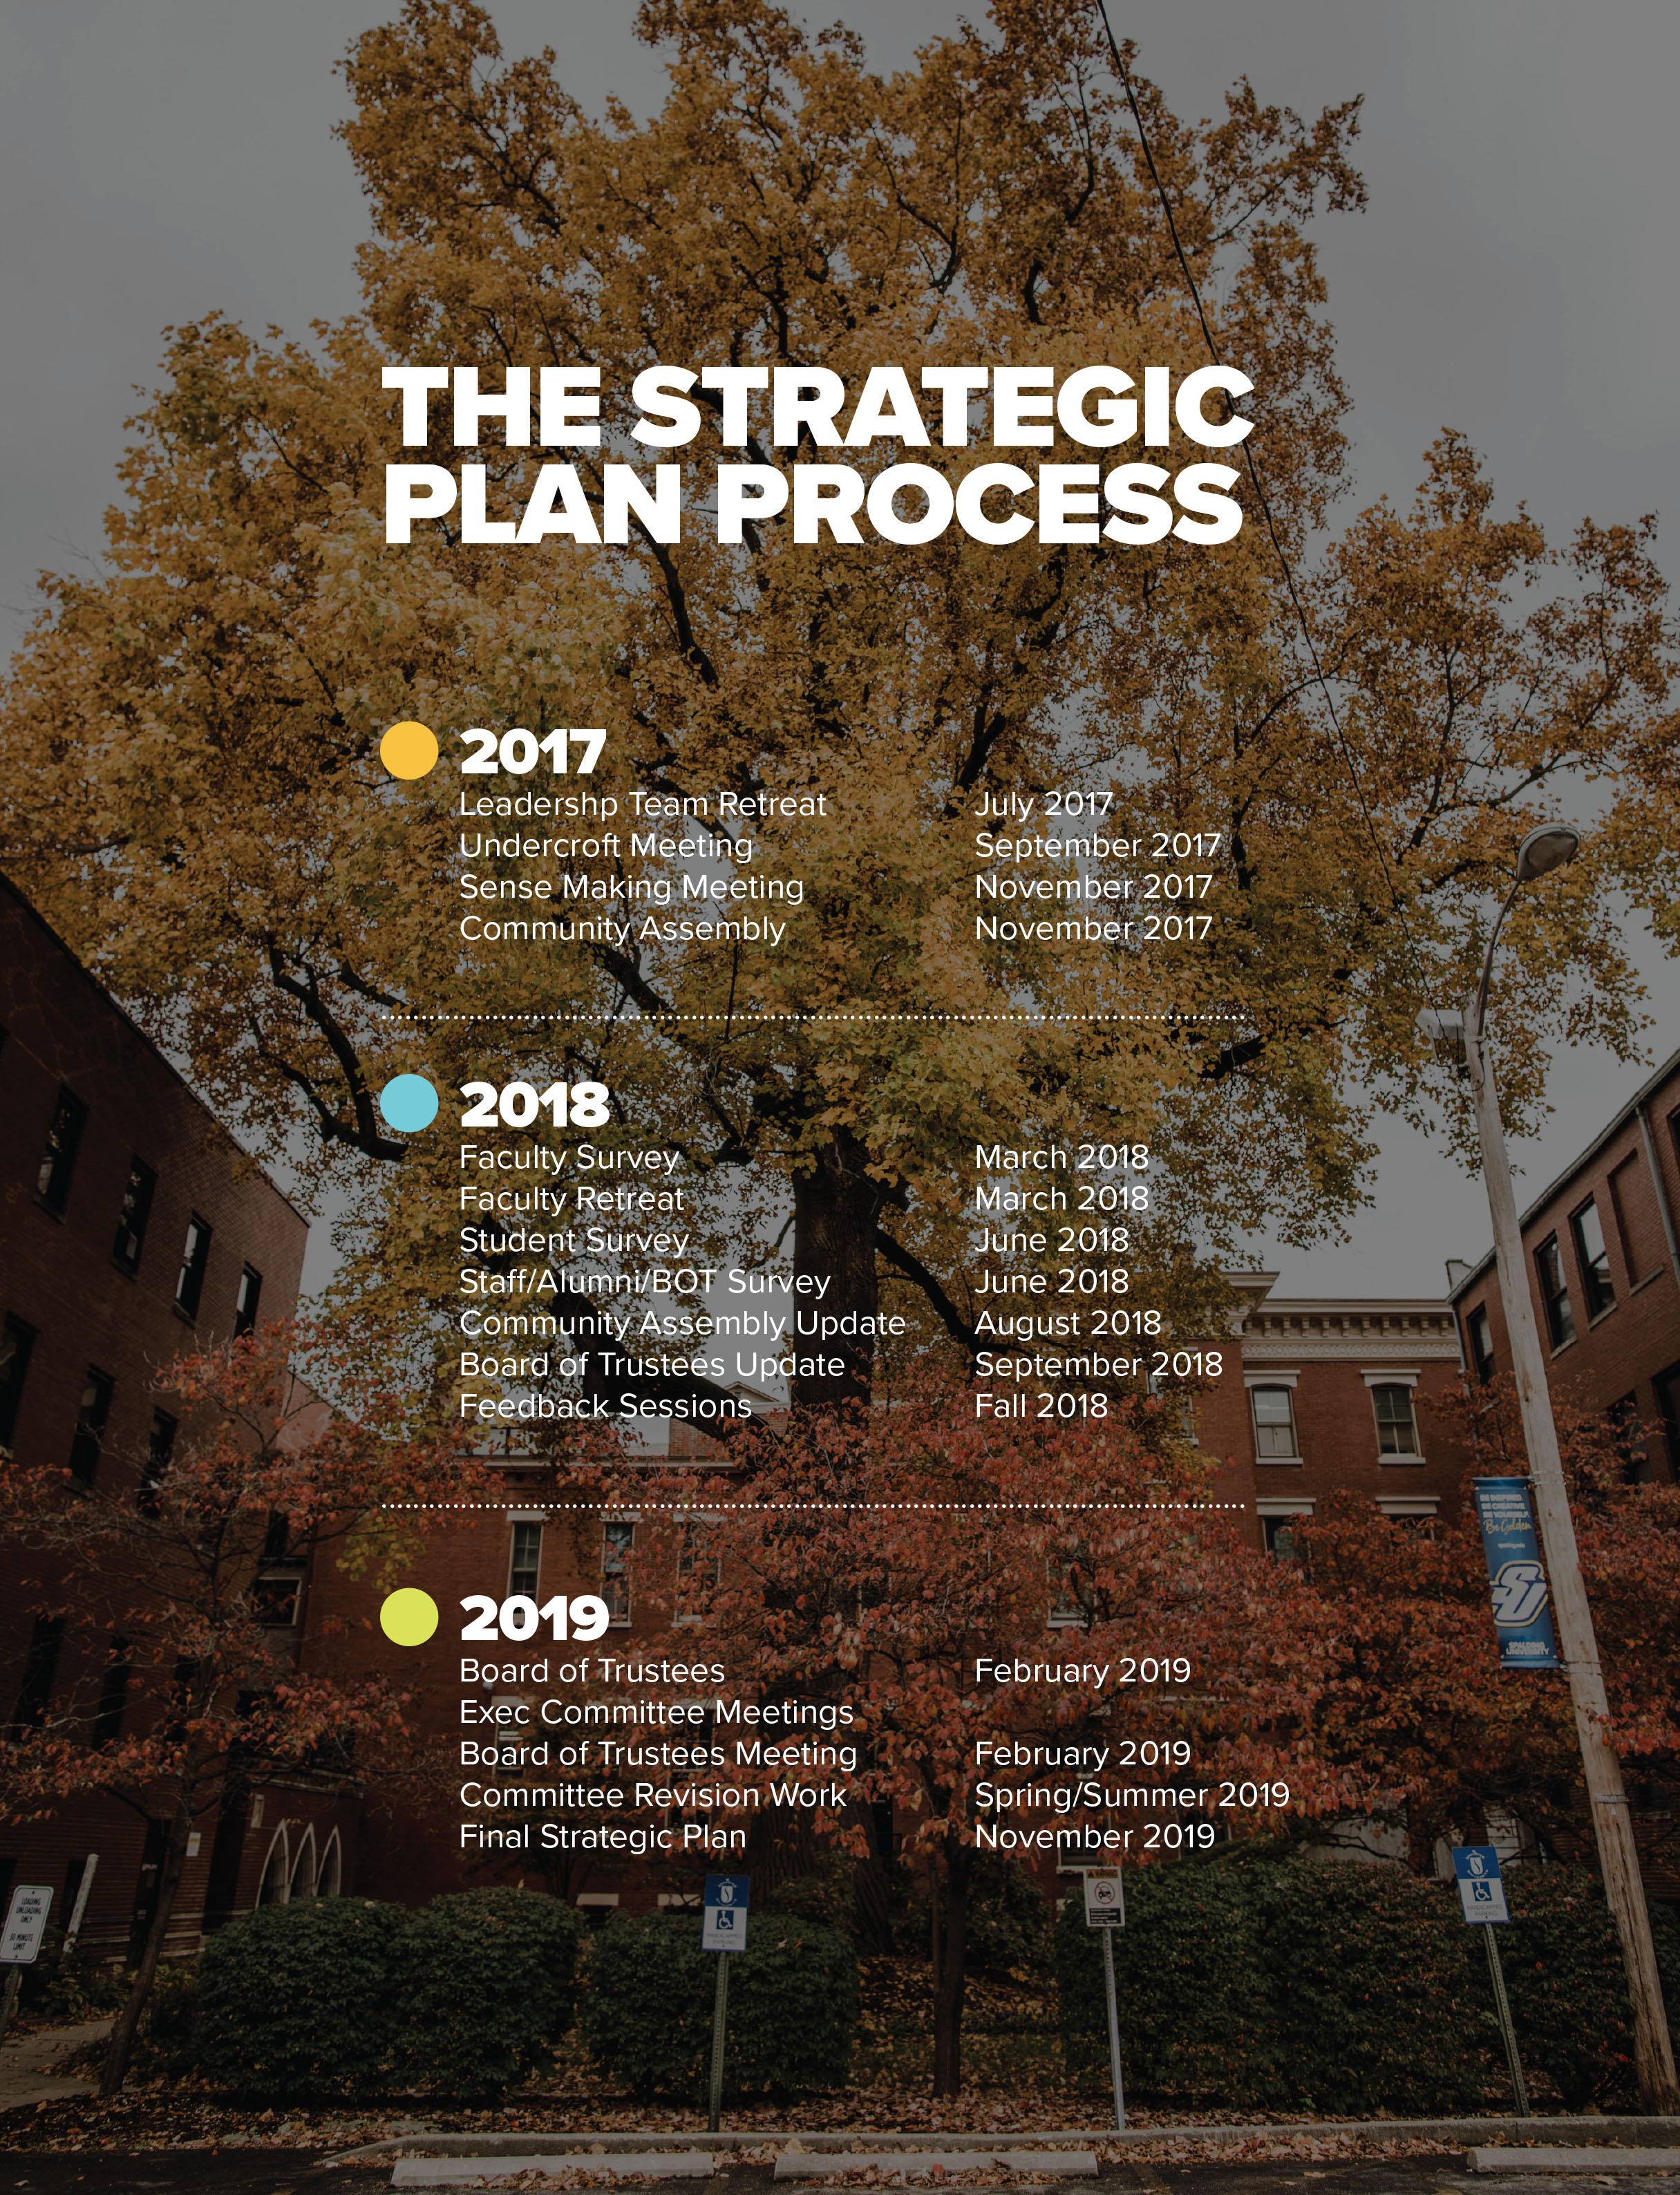 Outline of Strategic Plan Process